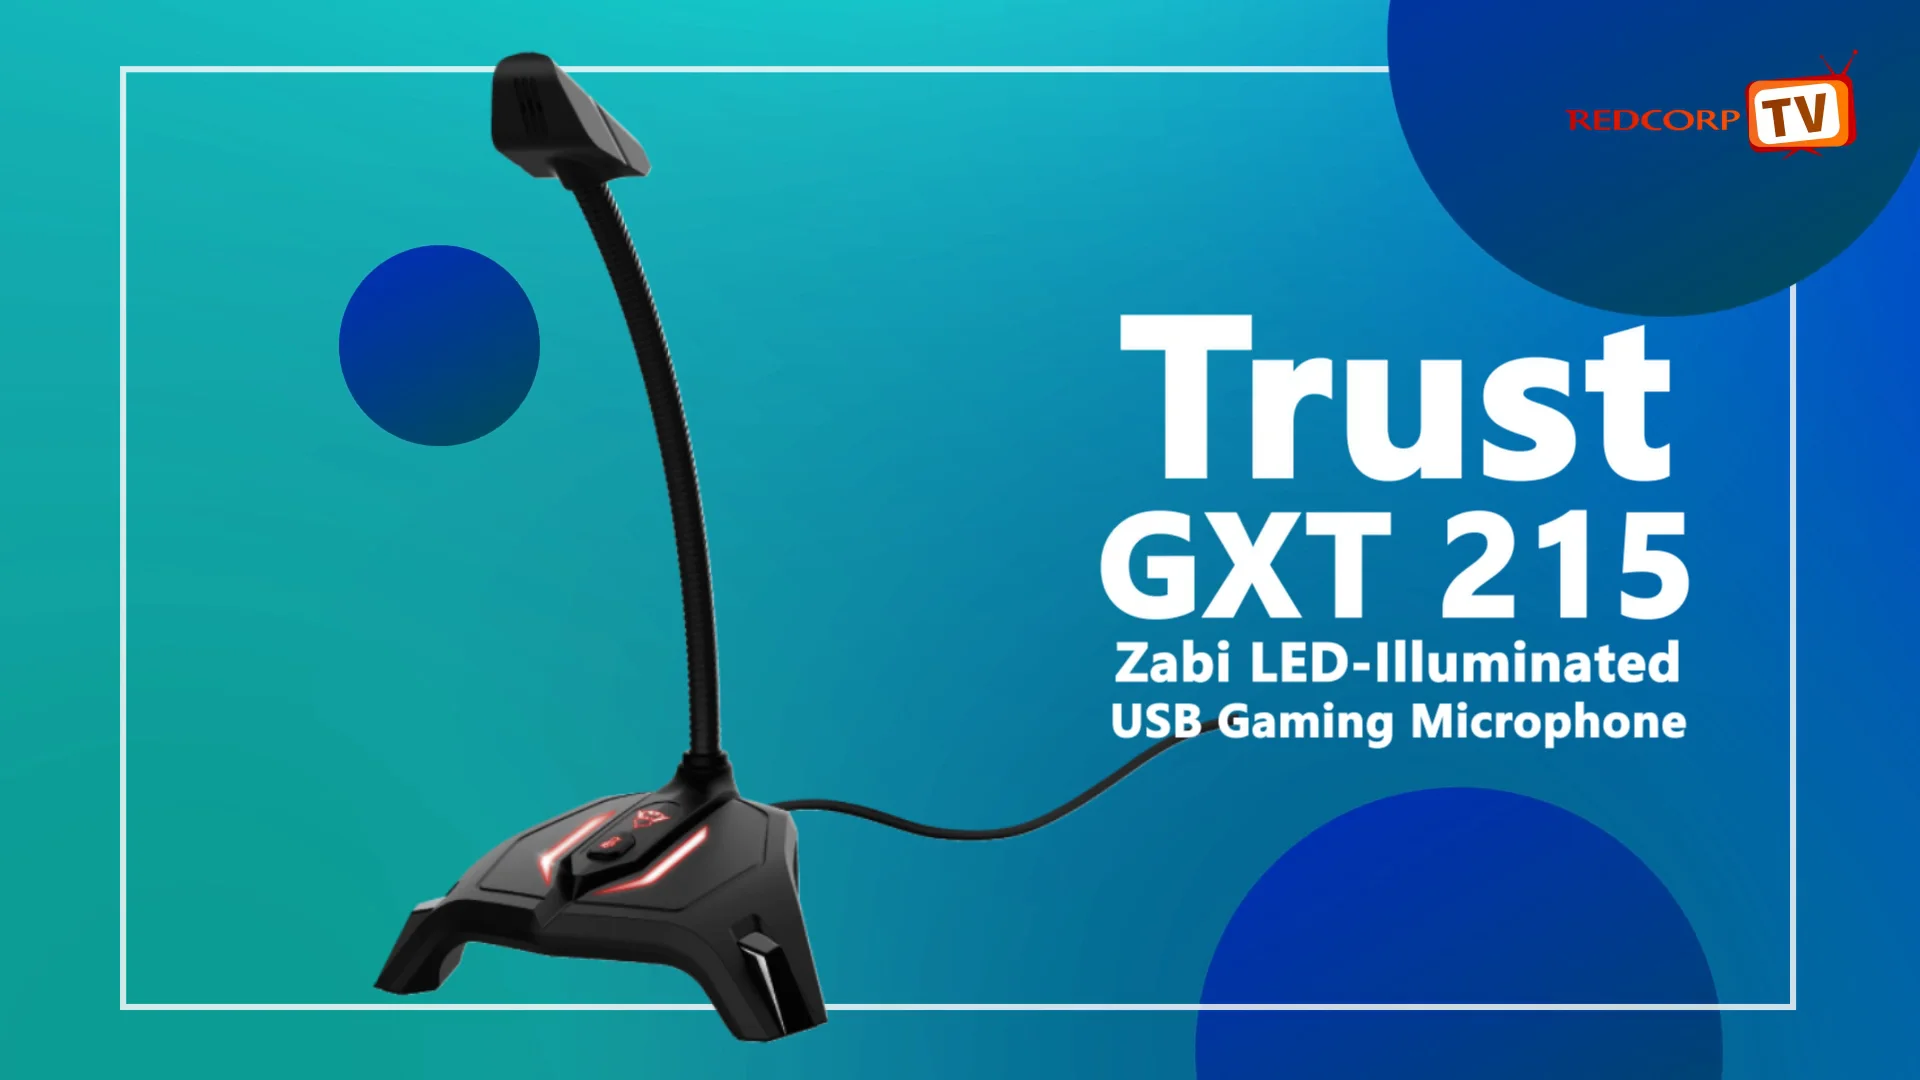 USB LED-Illuminated Microphone Gaming Trust 215 Zabi on Vimeo GXT